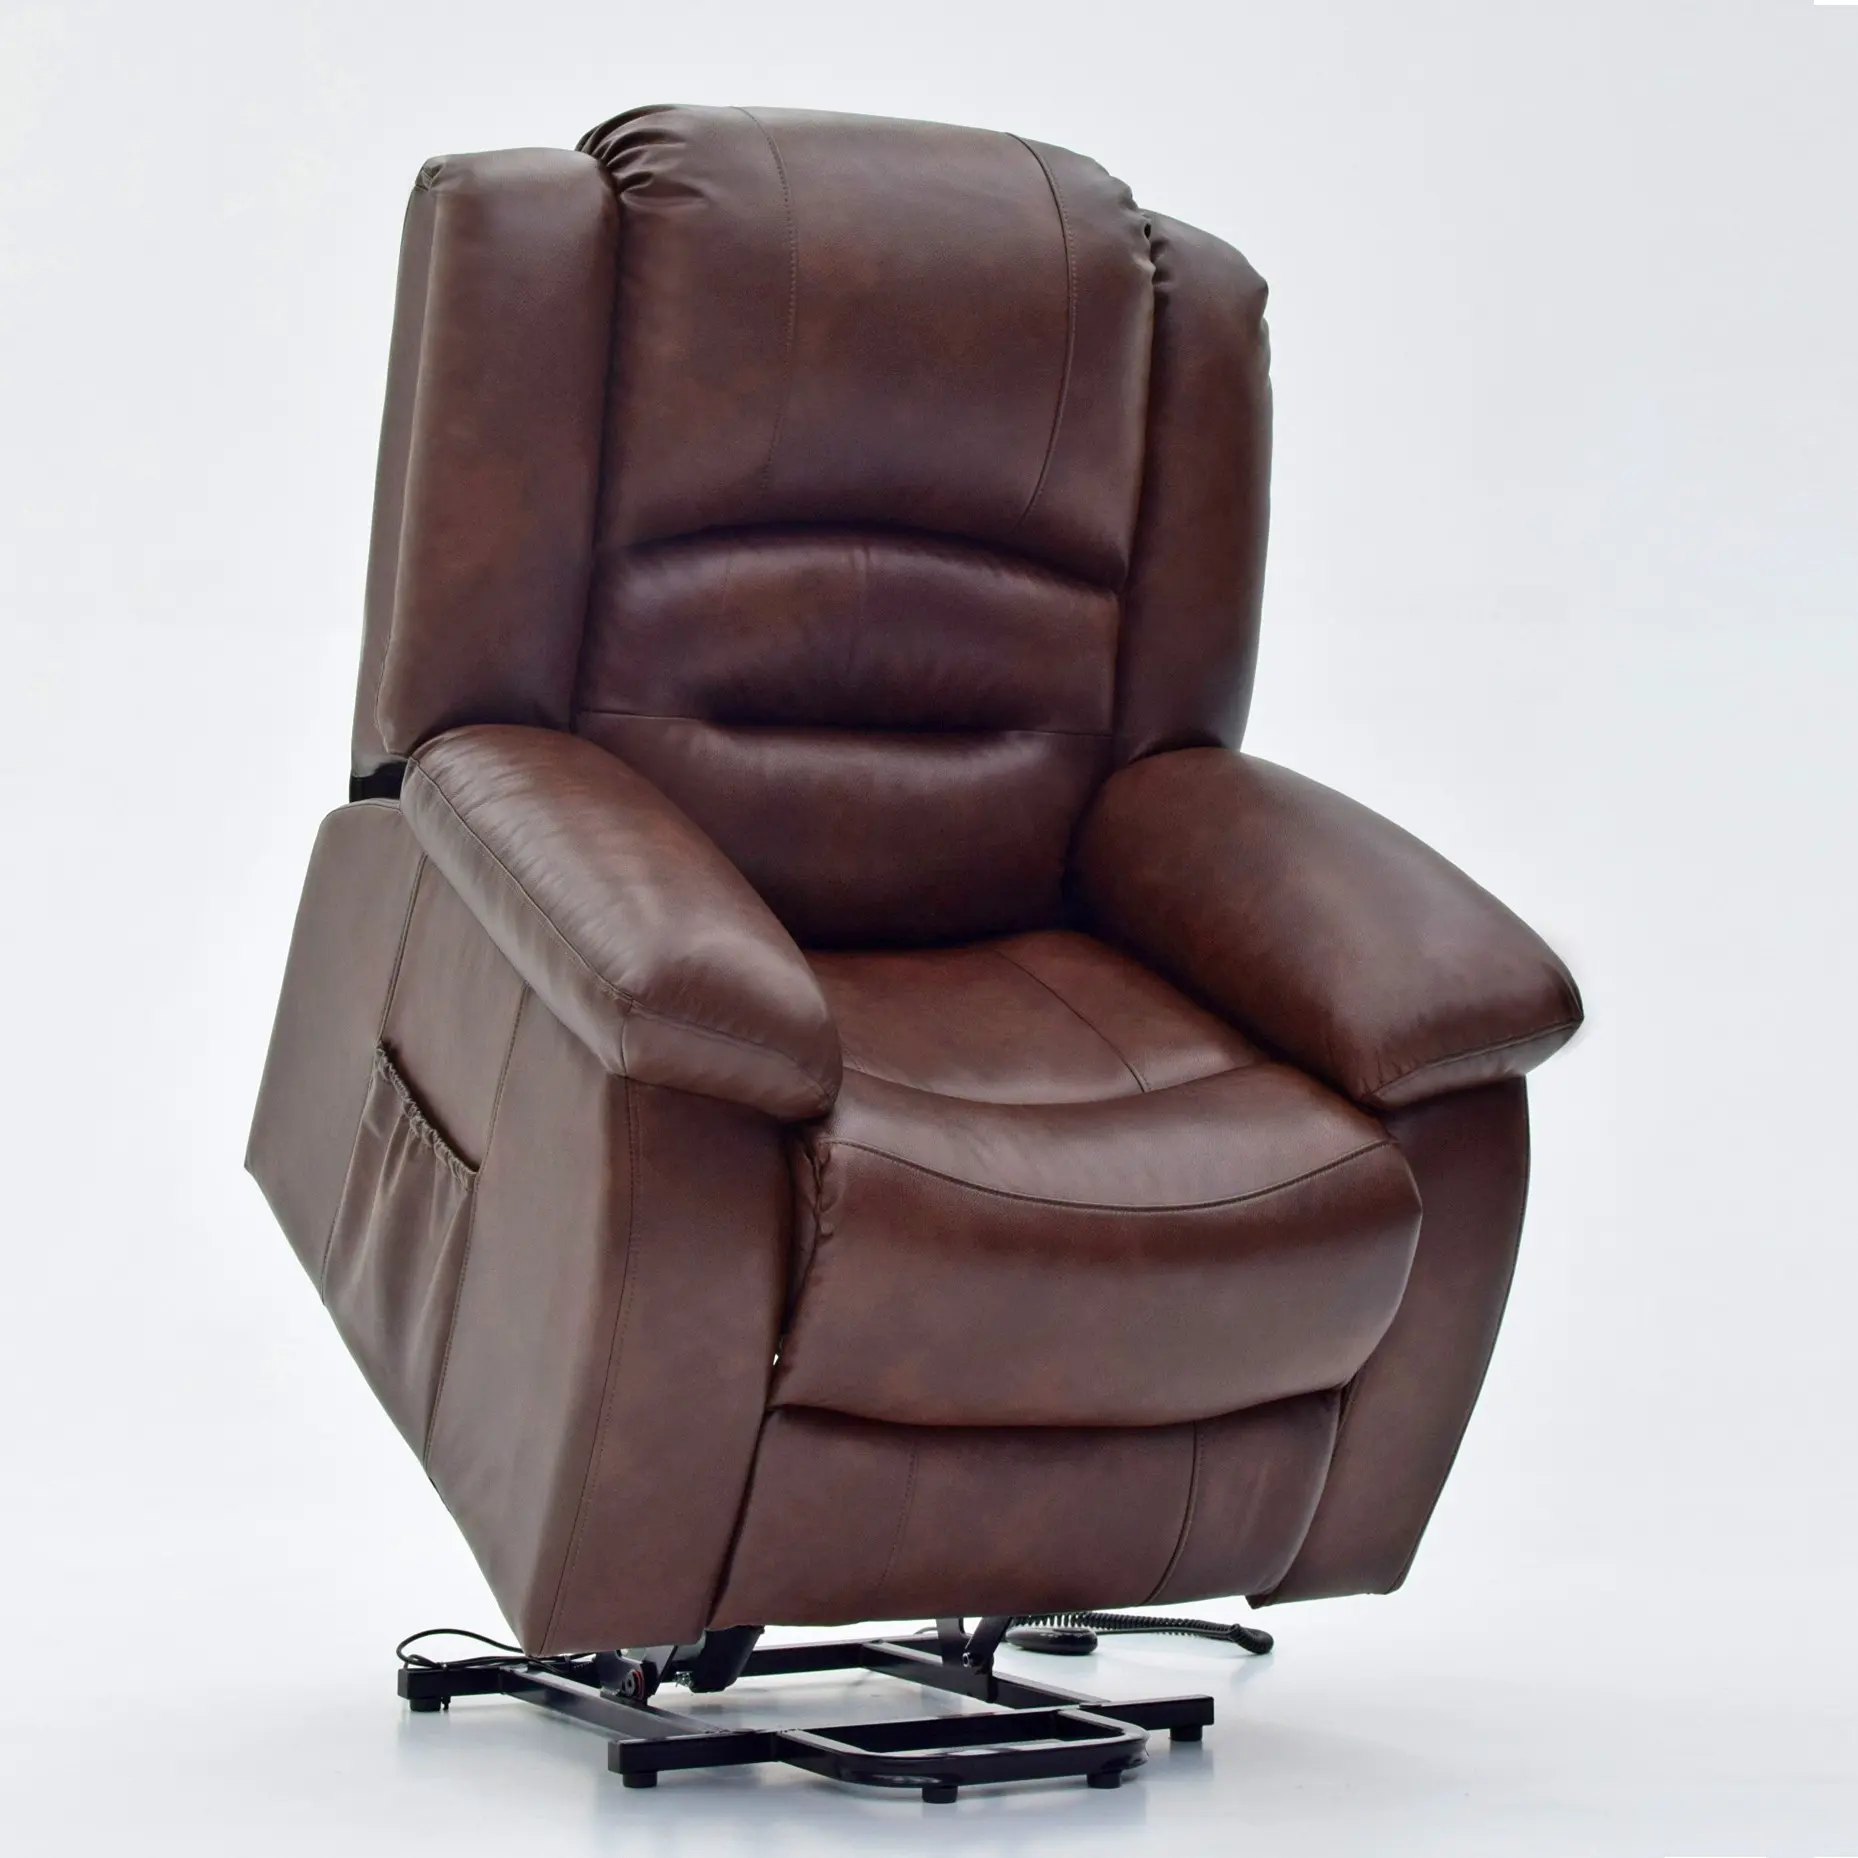 Geeksofa 거실 현대 가죽 전원 전기 라이저 리프트 의료 안락 의자 마사지 기능 장애인